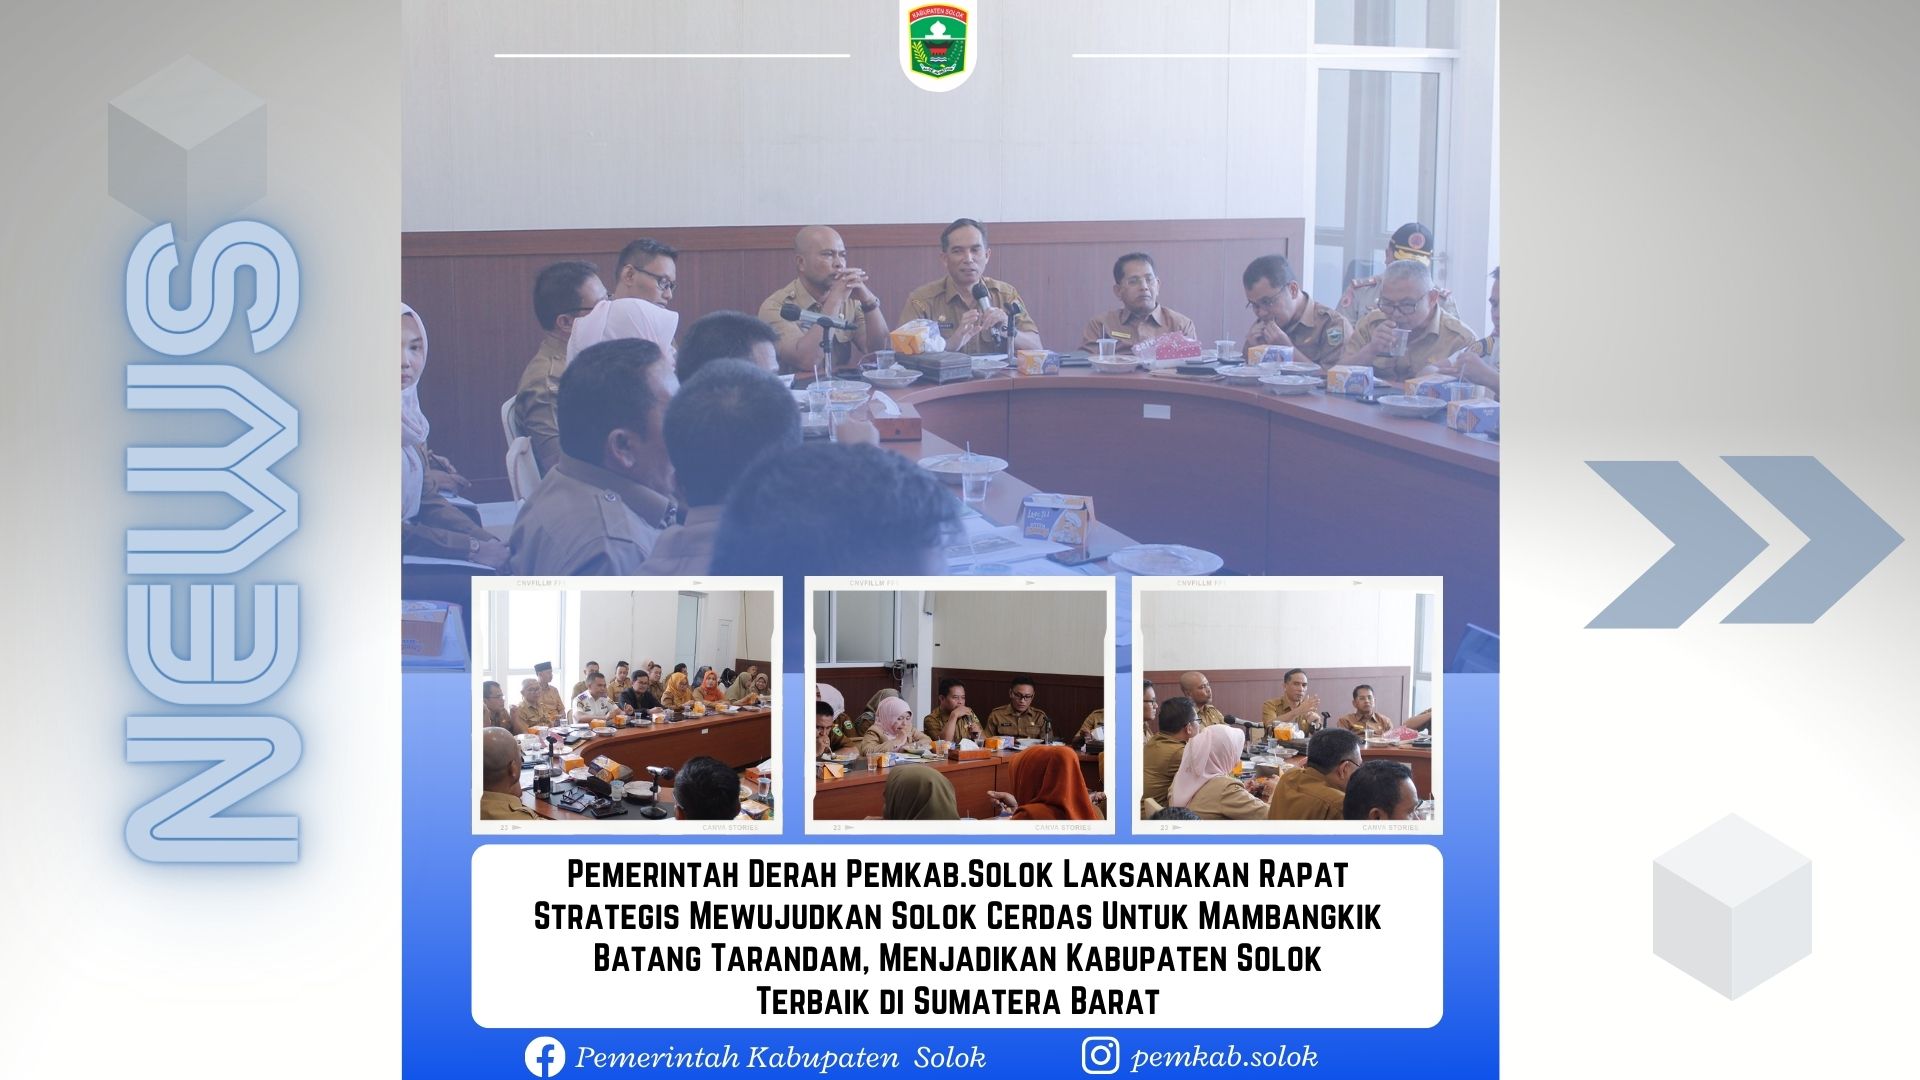 Pemerintah Daerah Pemkab.Solok Laksanakan Rapat Strategis Mewujudkan Solok Cerdas Untuk Mambangkik Batang Tarandam, Menjadikan Kabupaten Solok Terbaik di Sumatera Barat